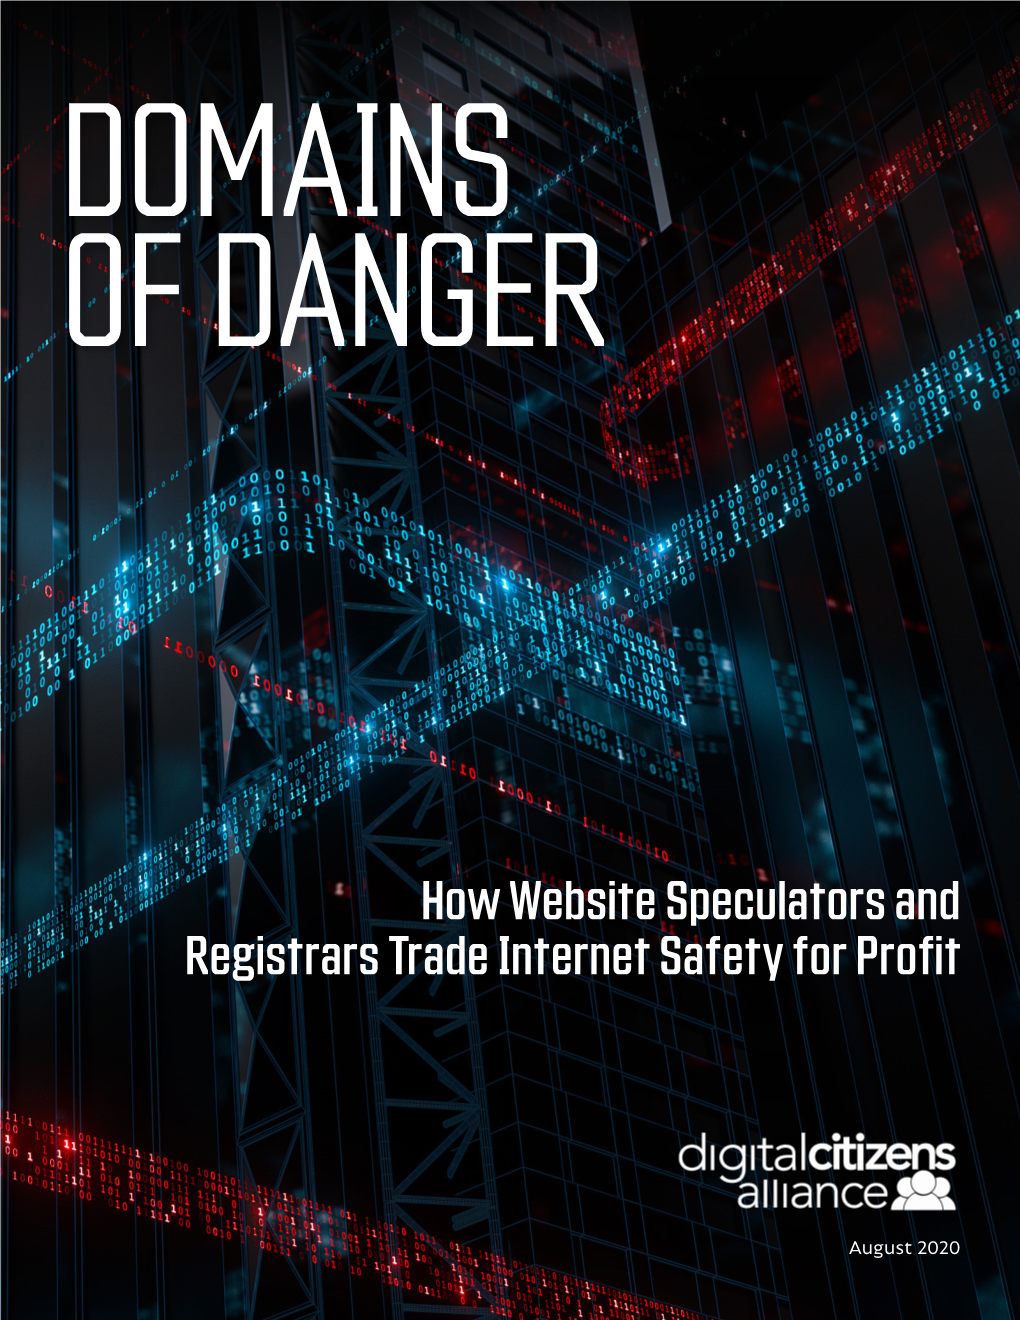 How Website Speculators and Registrars Trade Internet Safety for Profit